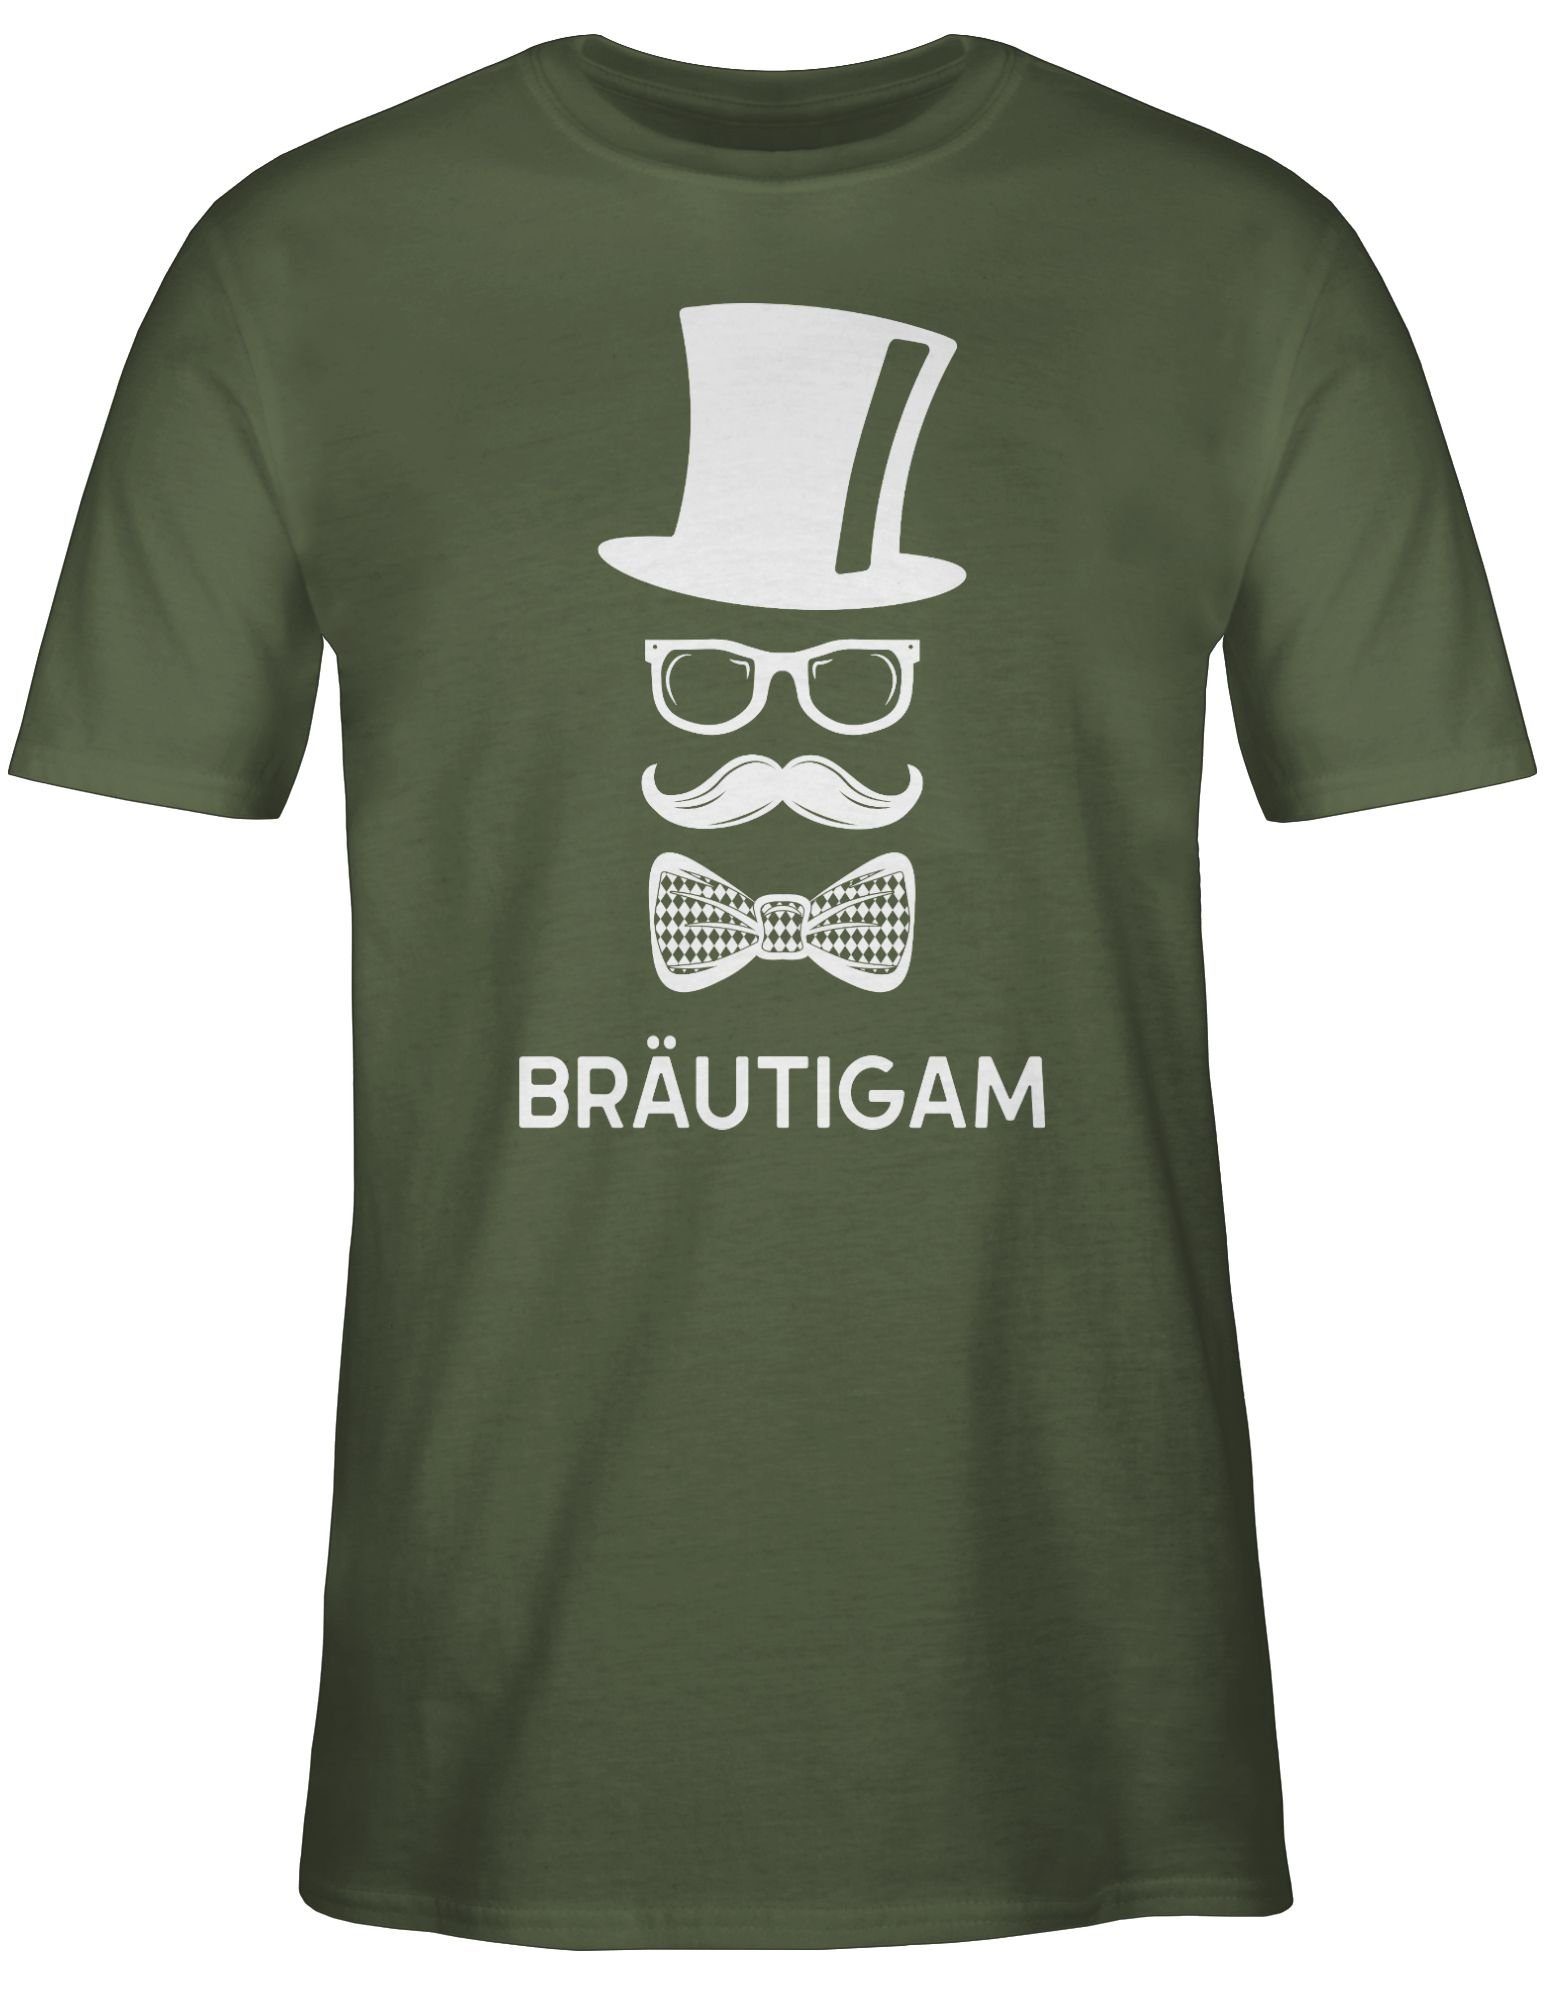 Männer JGA 03 Bräutigam Gentleman T-Shirt Shirtracer Army Grün